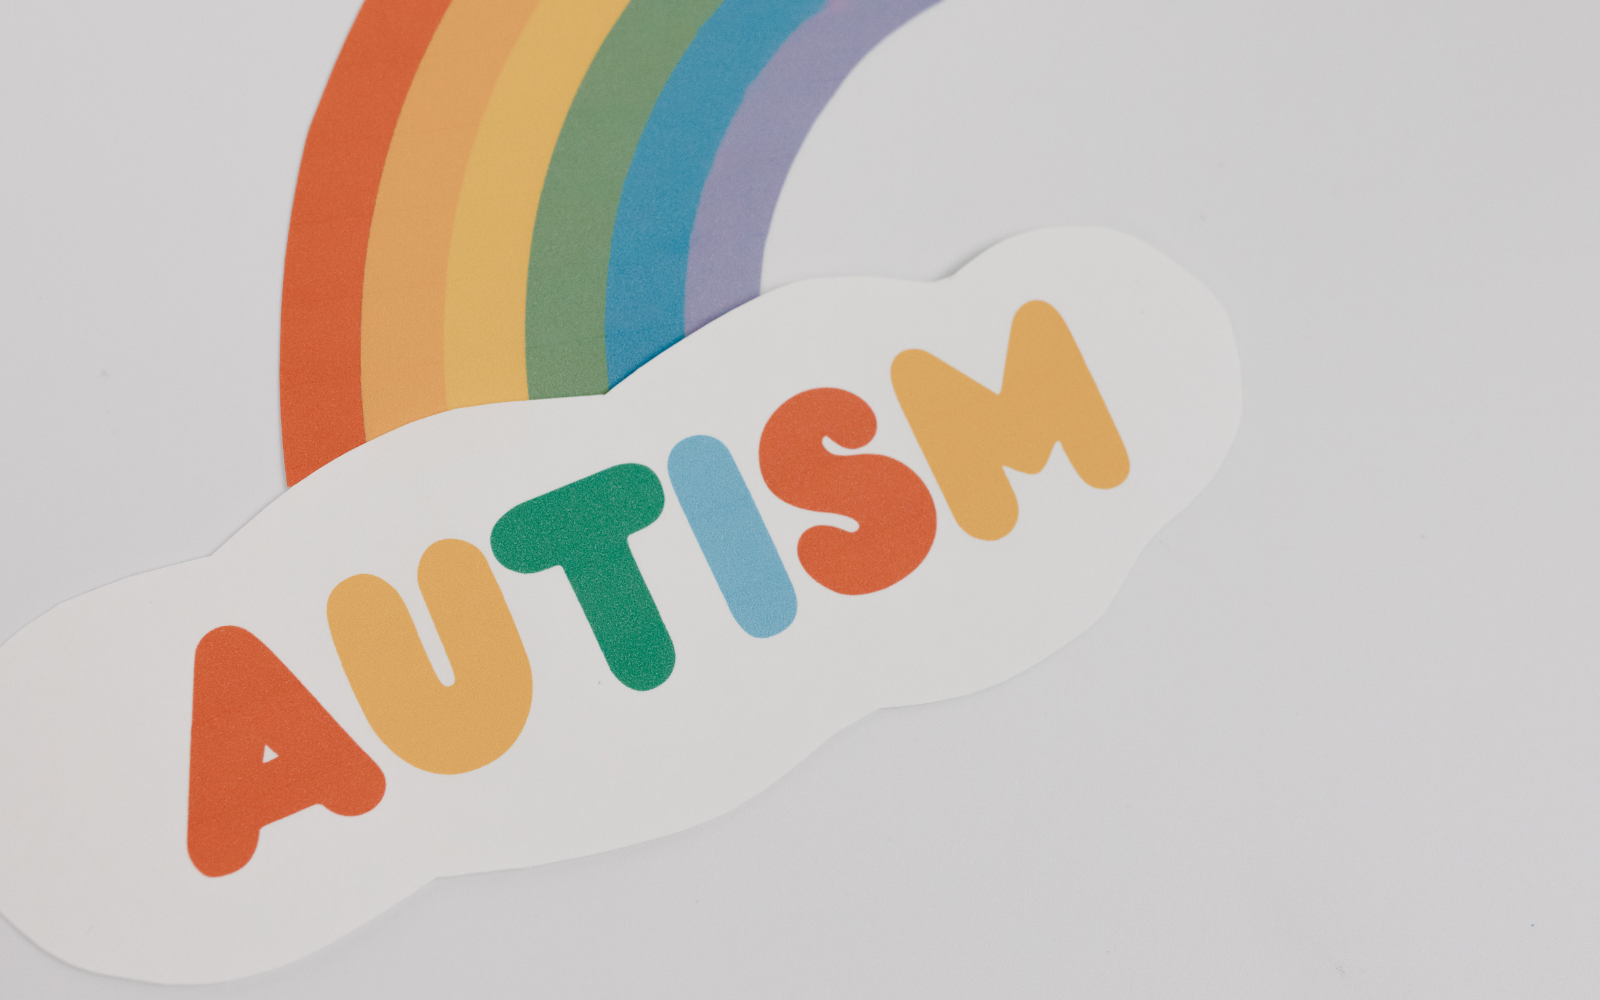 How to Explain Autism to Kids